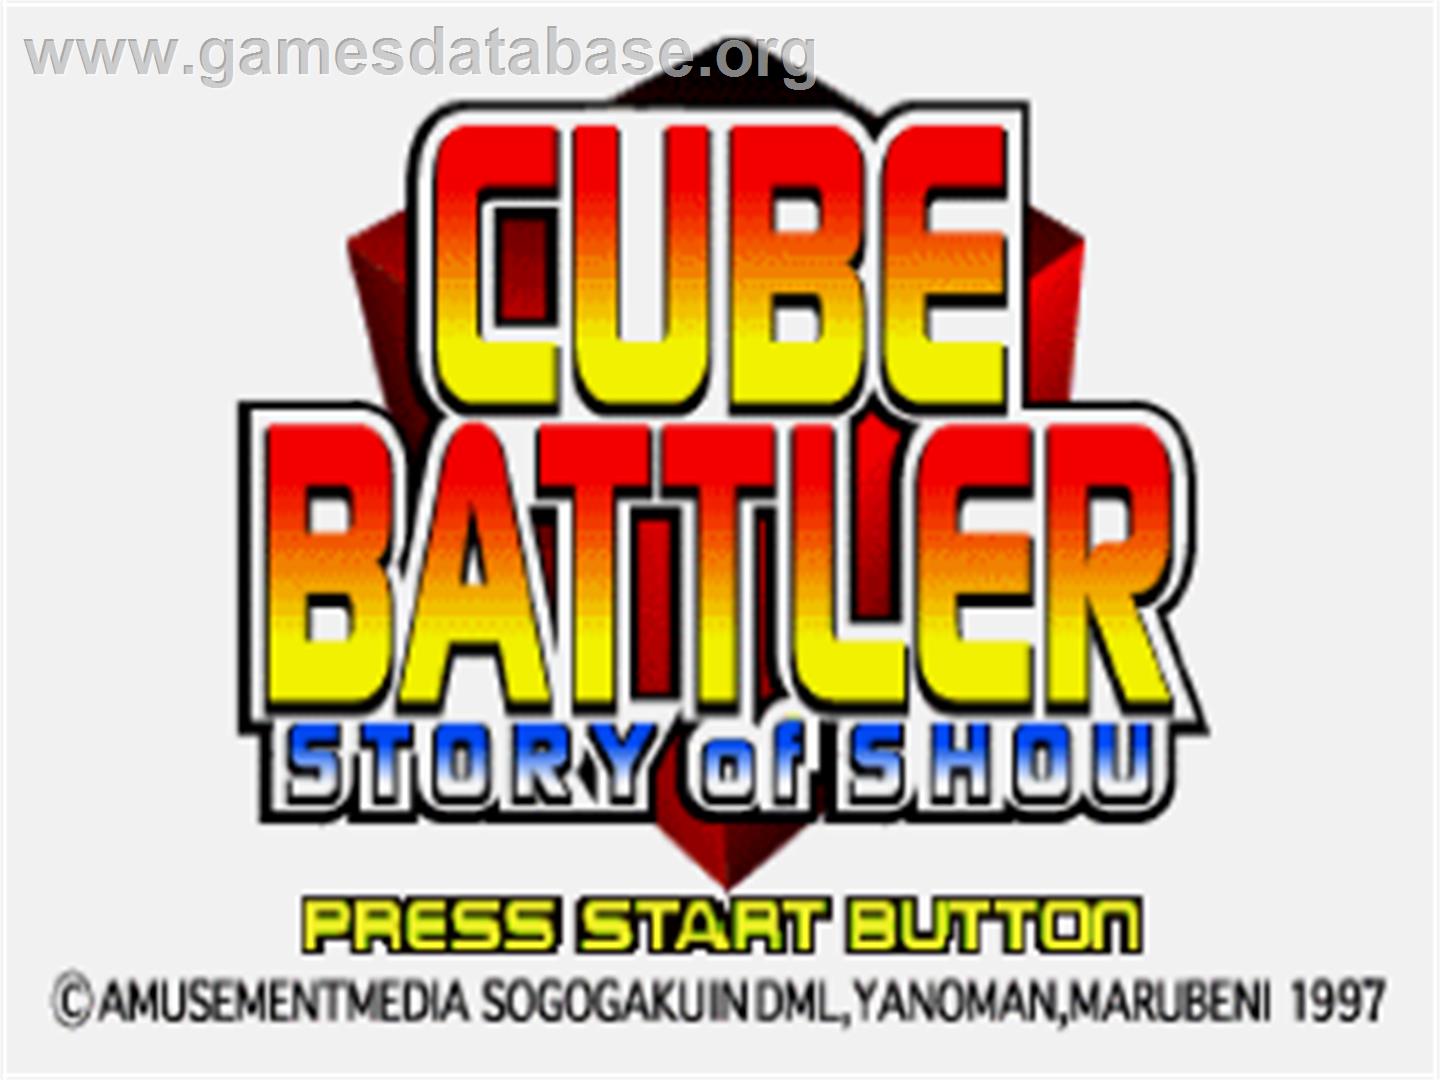 Cube Battler: Story of Anna - Sega Saturn - Artwork - Title Screen